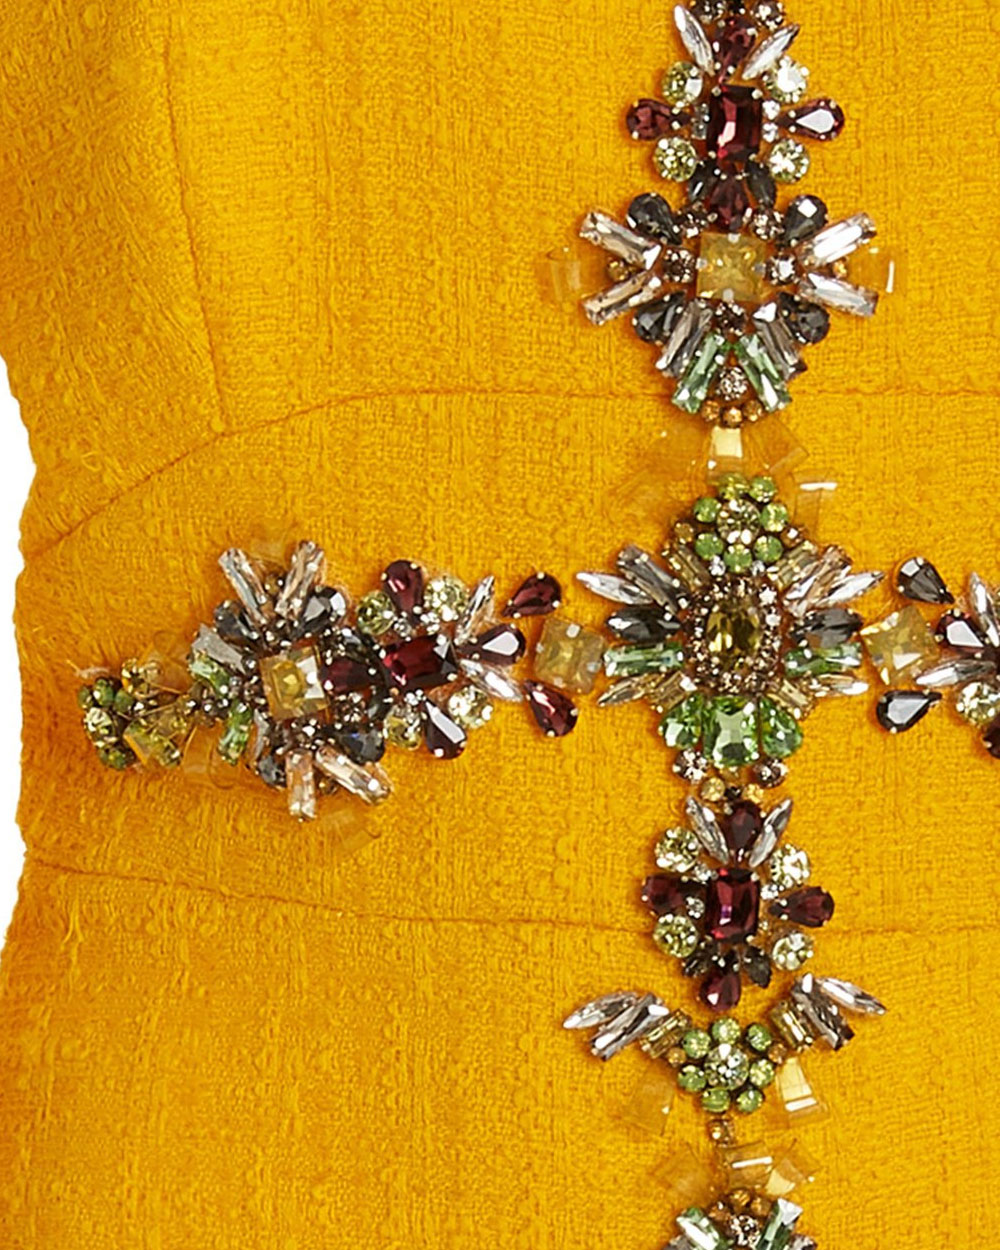 Goldenrod Embellished Tweed Mini Dress